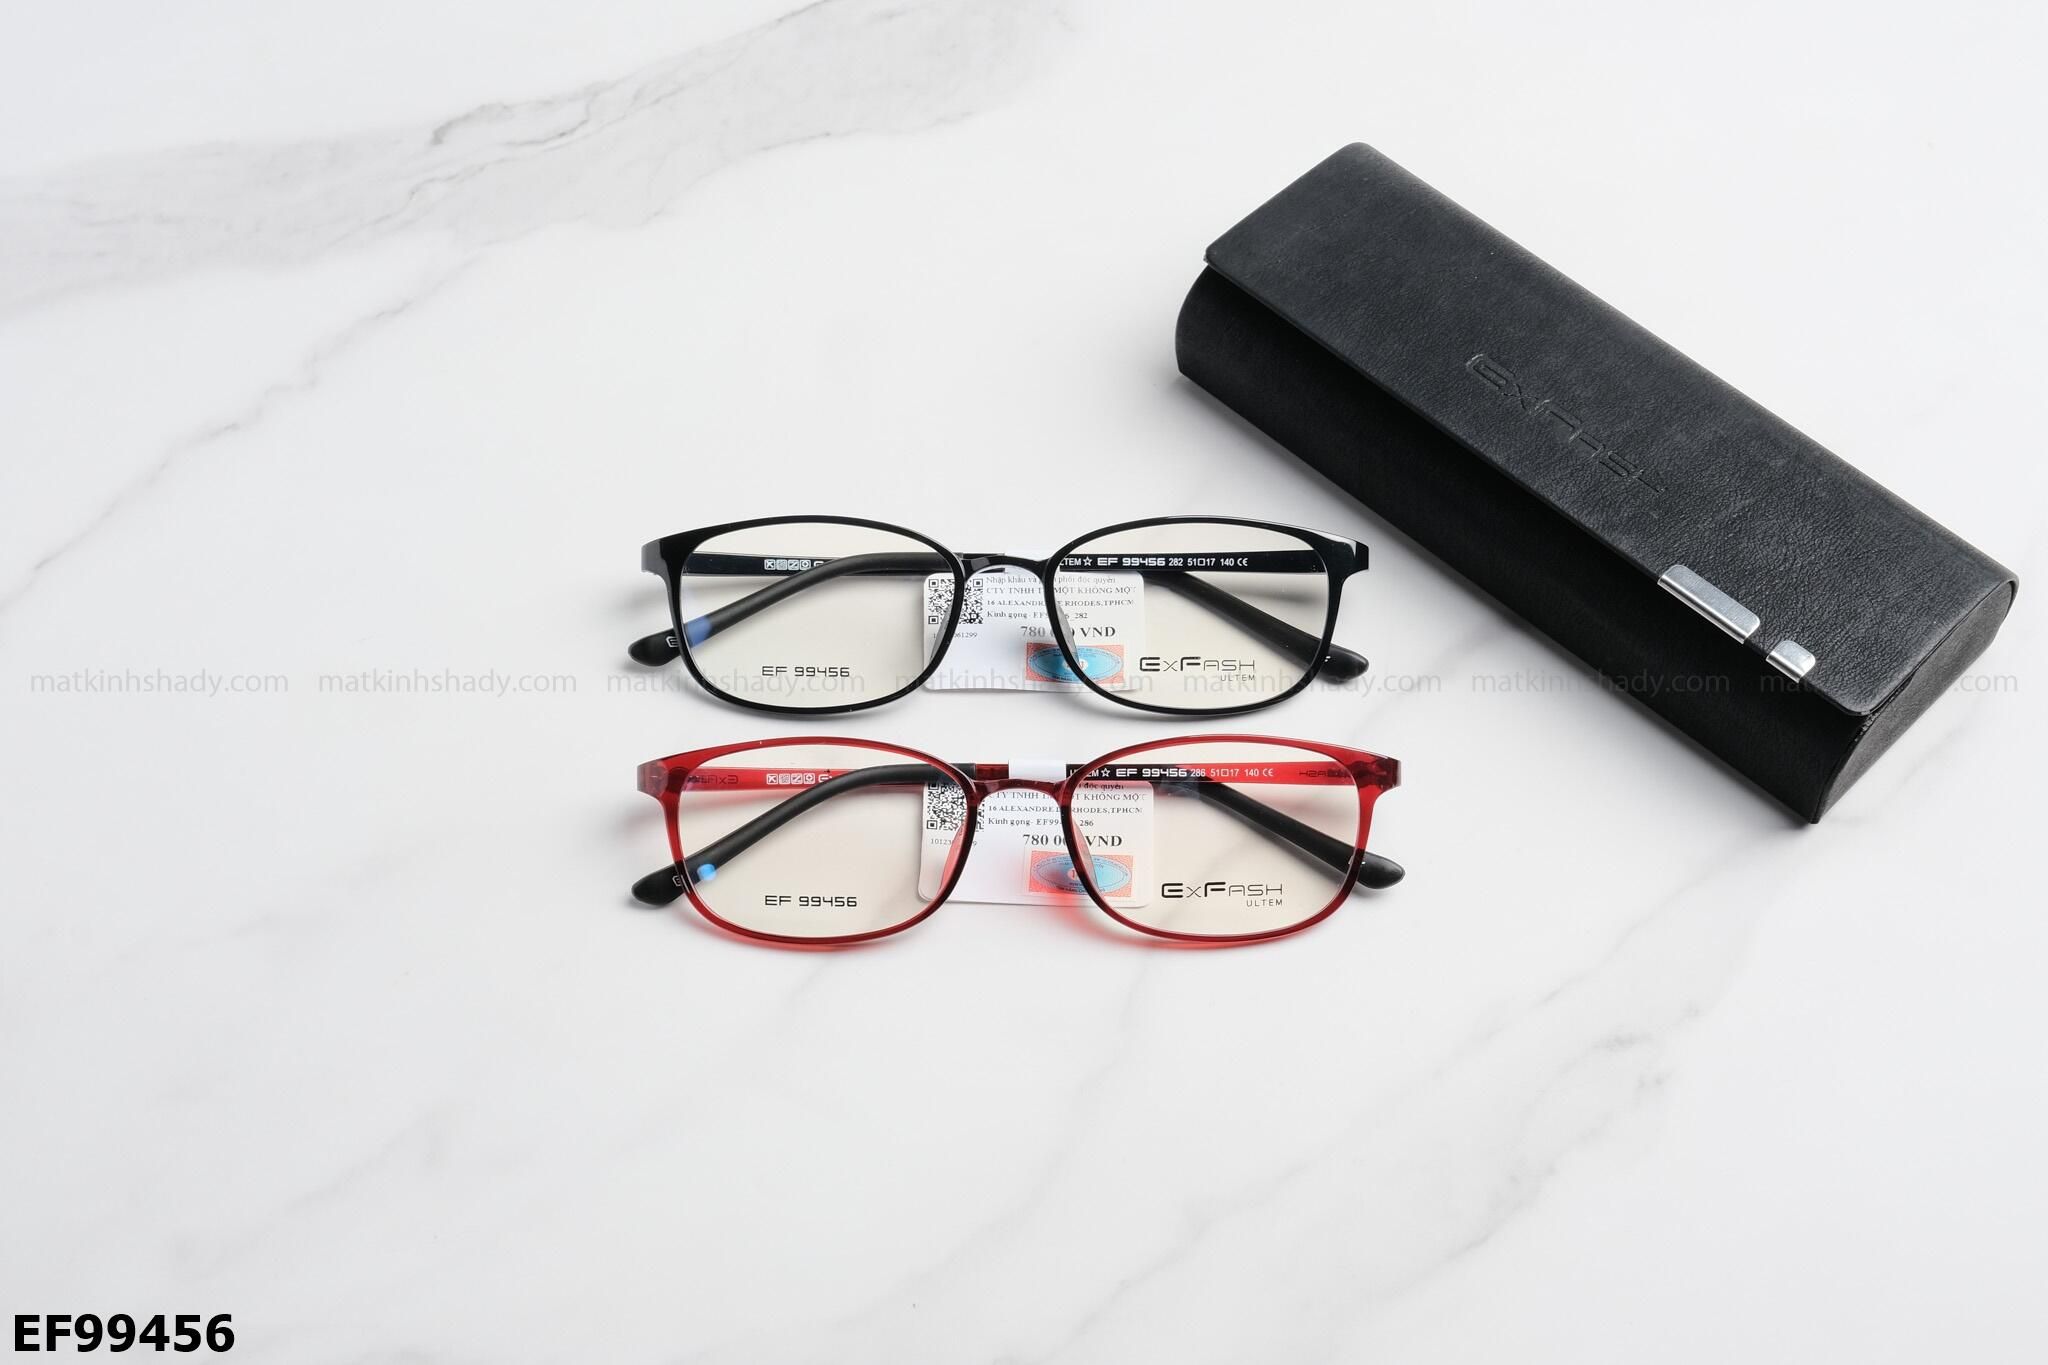  Exfash Eyewear - Glasses - EF99456 